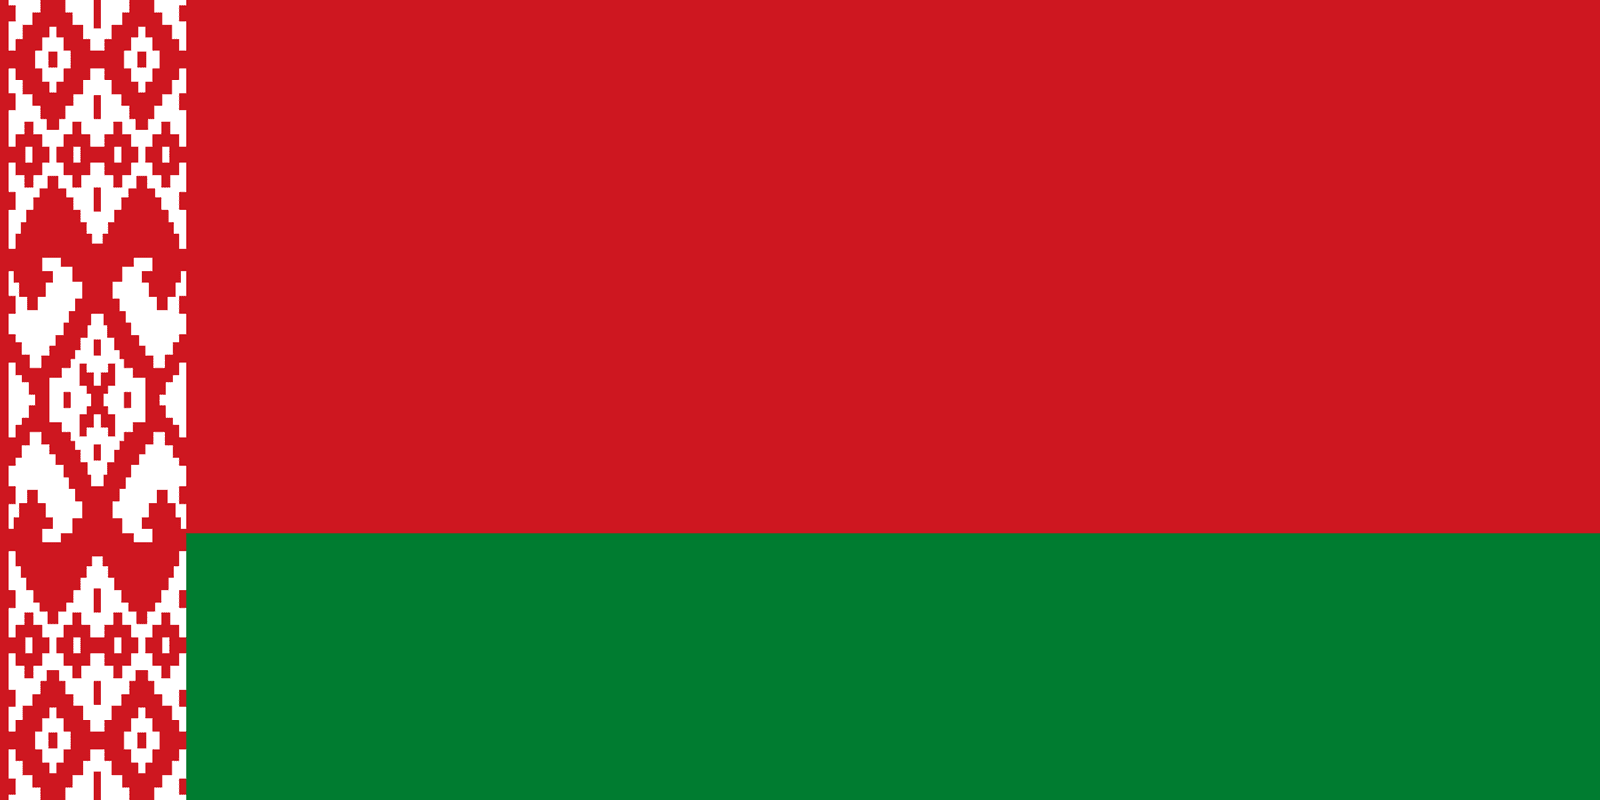 Belarus - Powered by Eduhyme.com